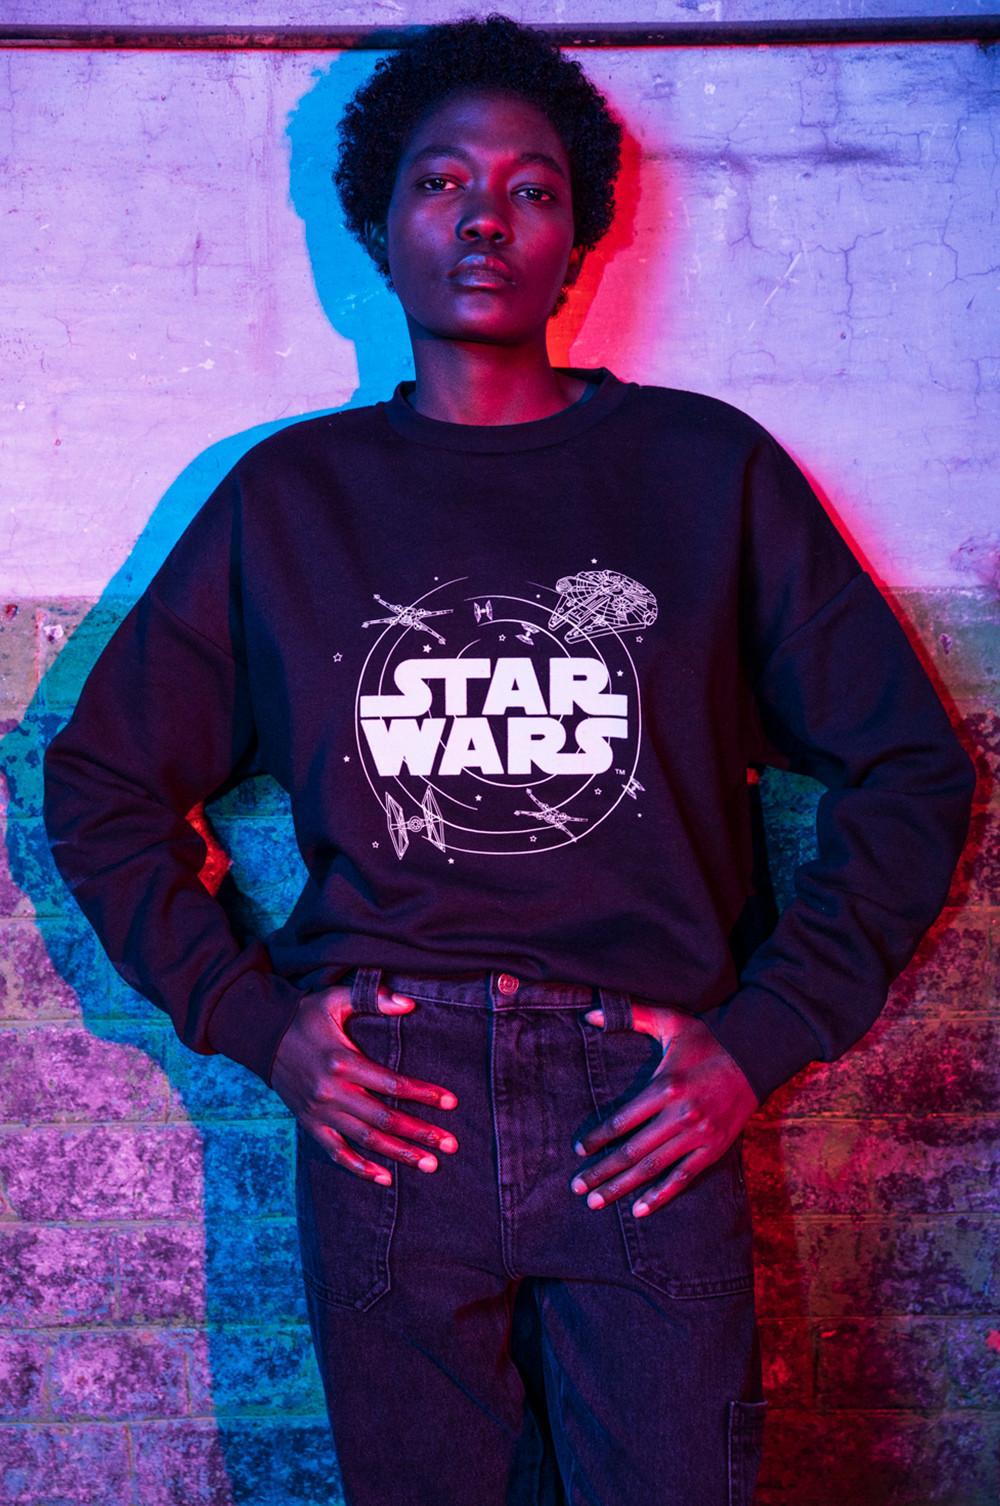 Model in a black Star Wars jumper